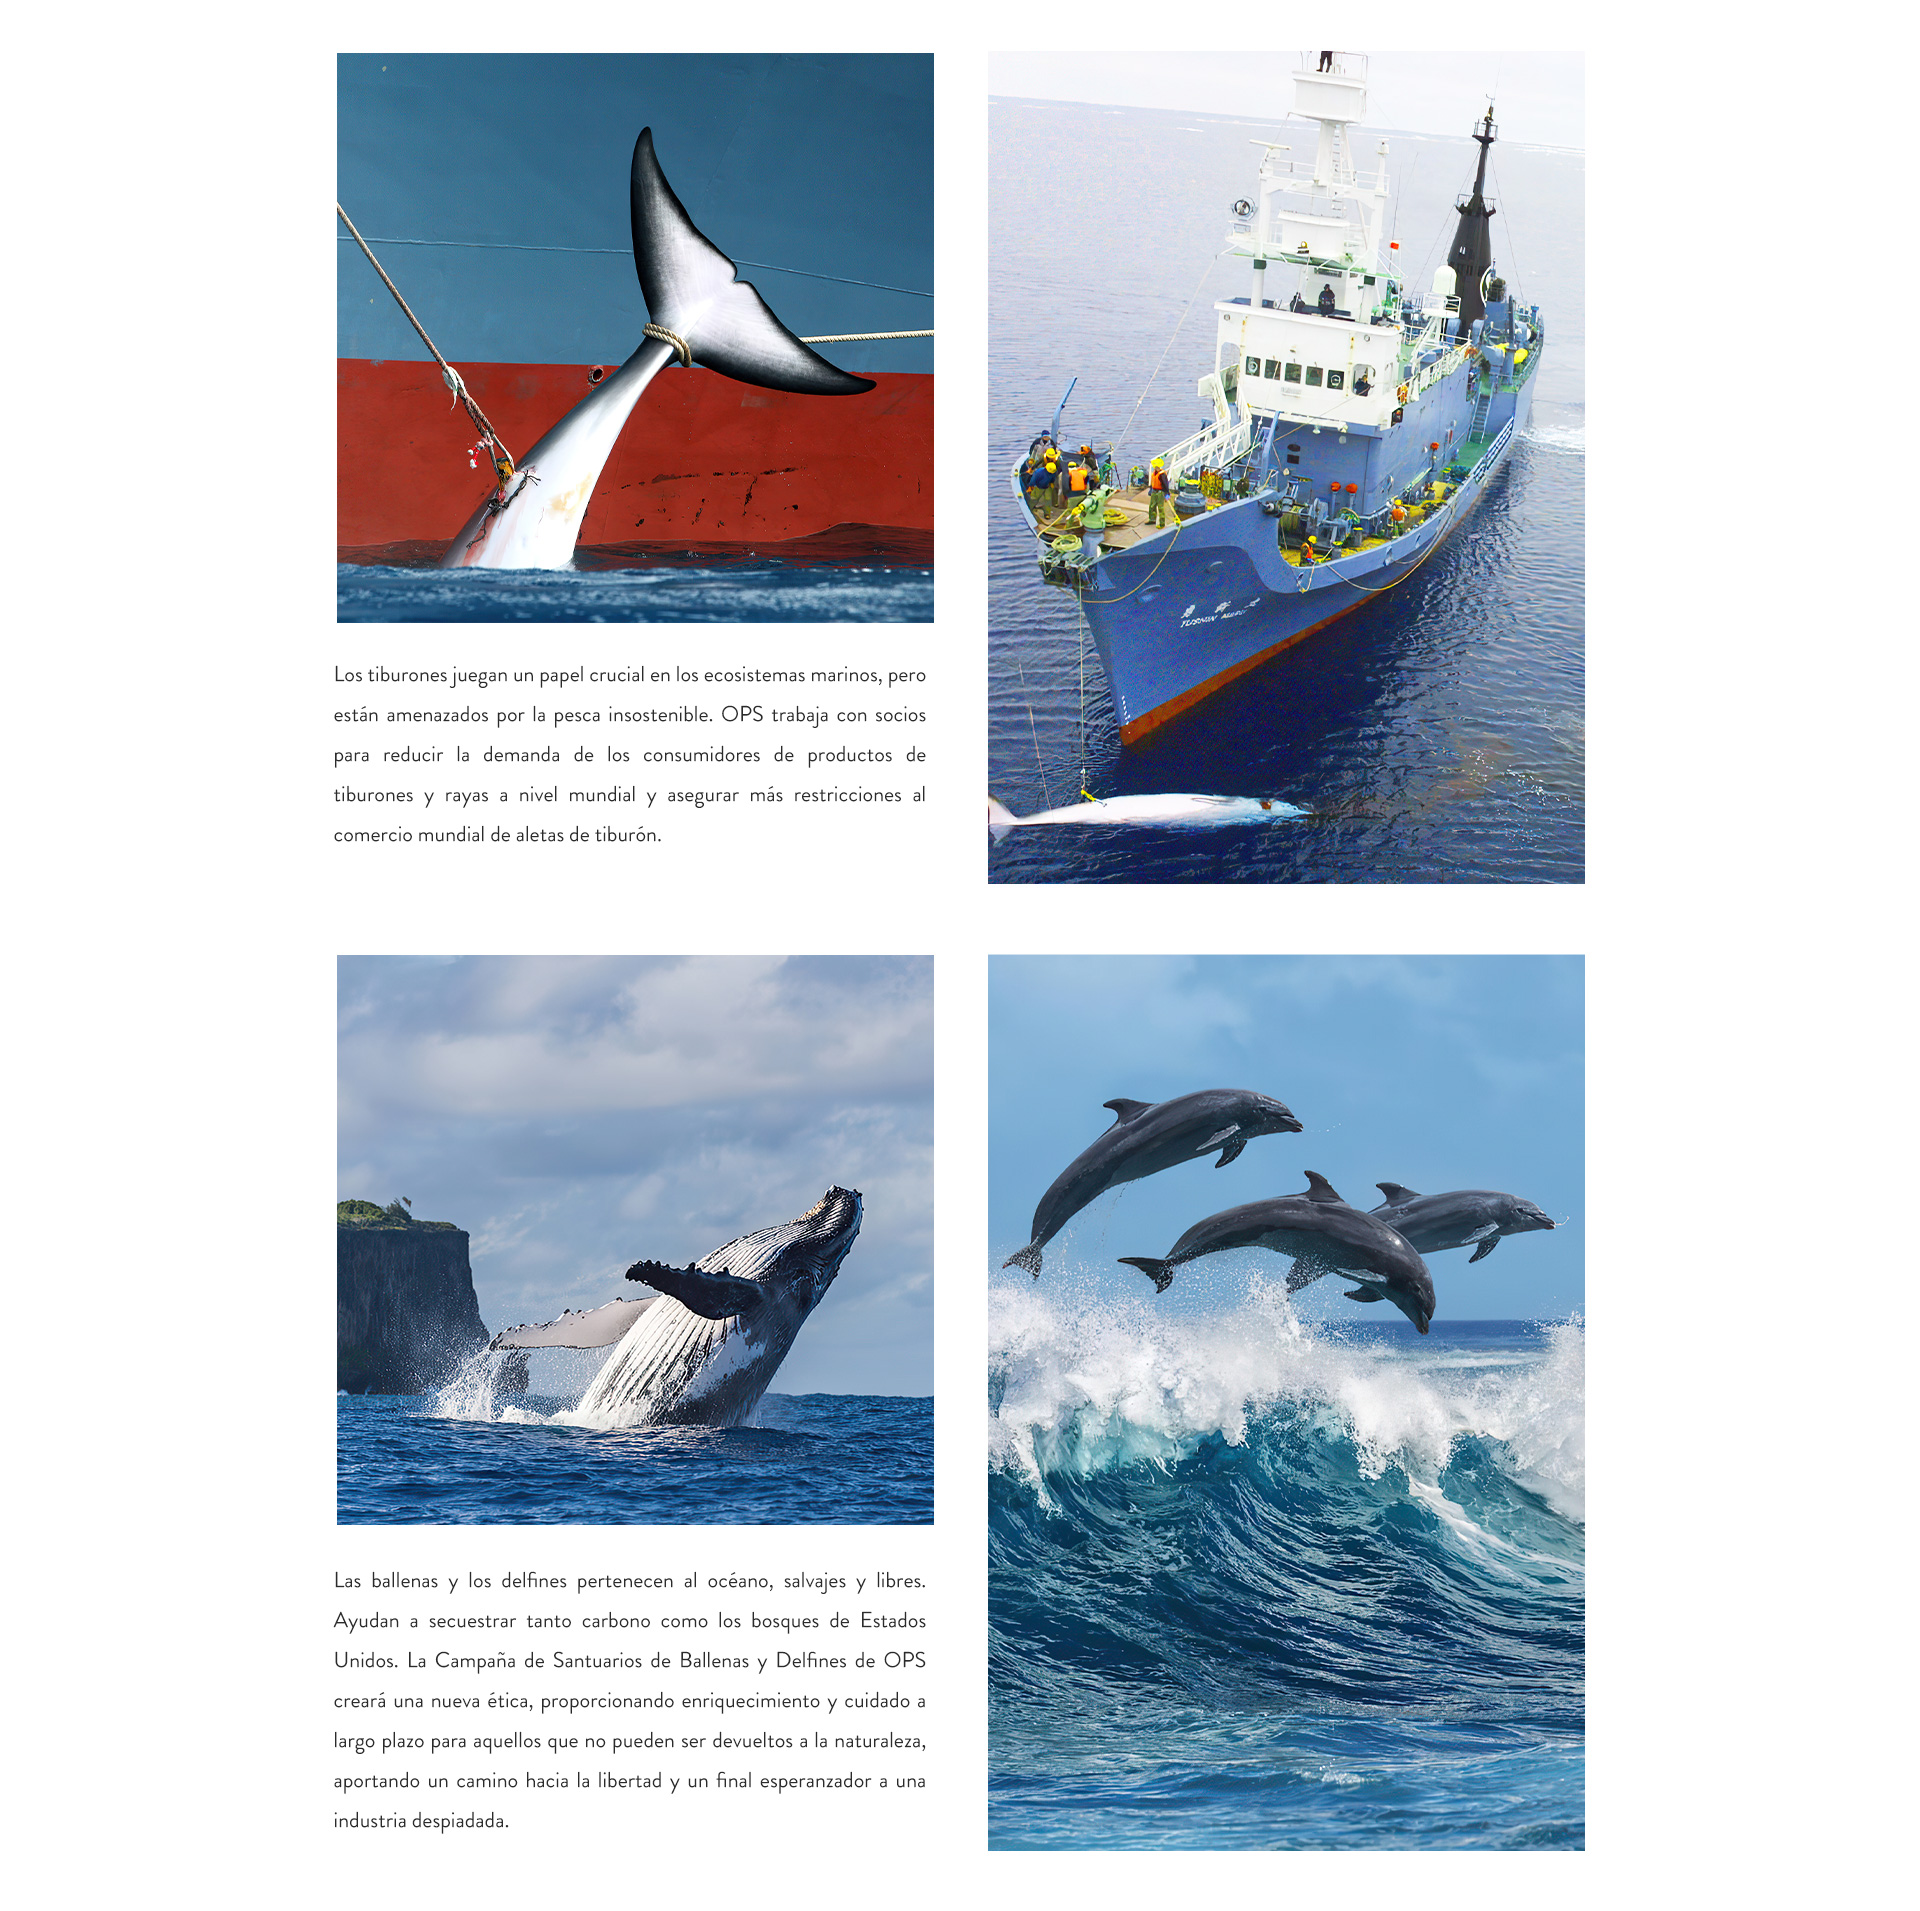 Jeulia's Partnership with Oceanic Preservation Society